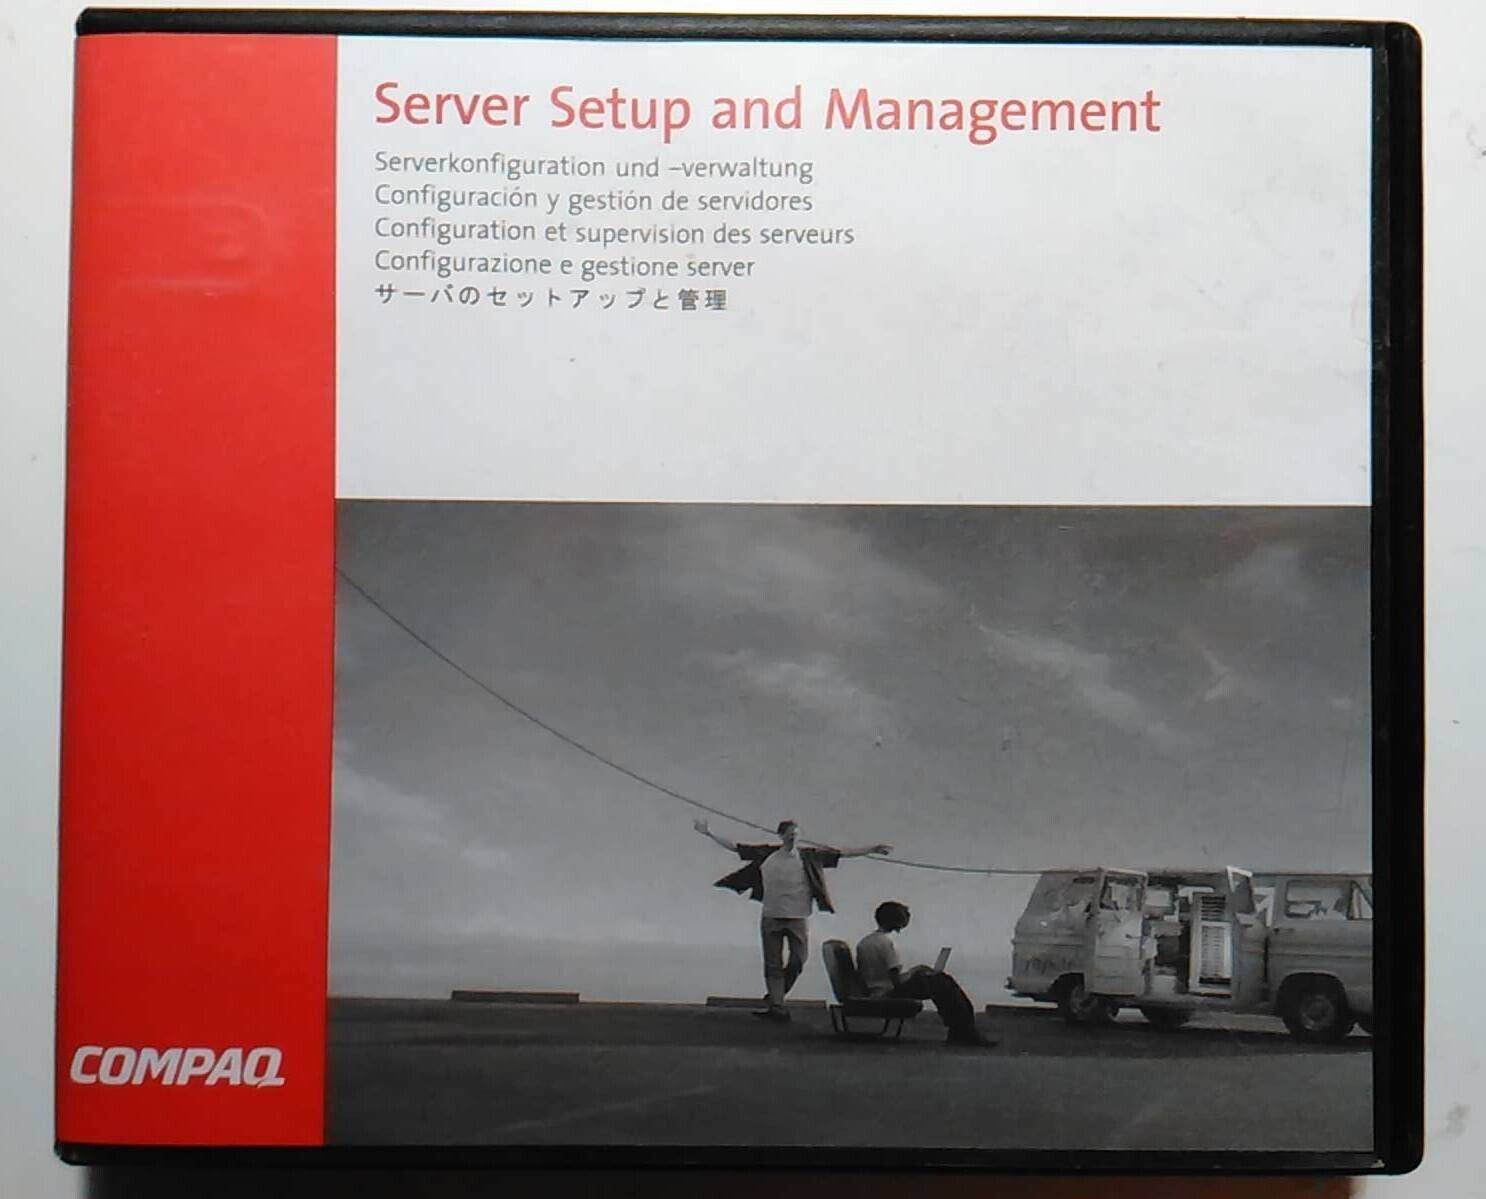 Compaq Server Setup and Management Software Pack Version 5.20